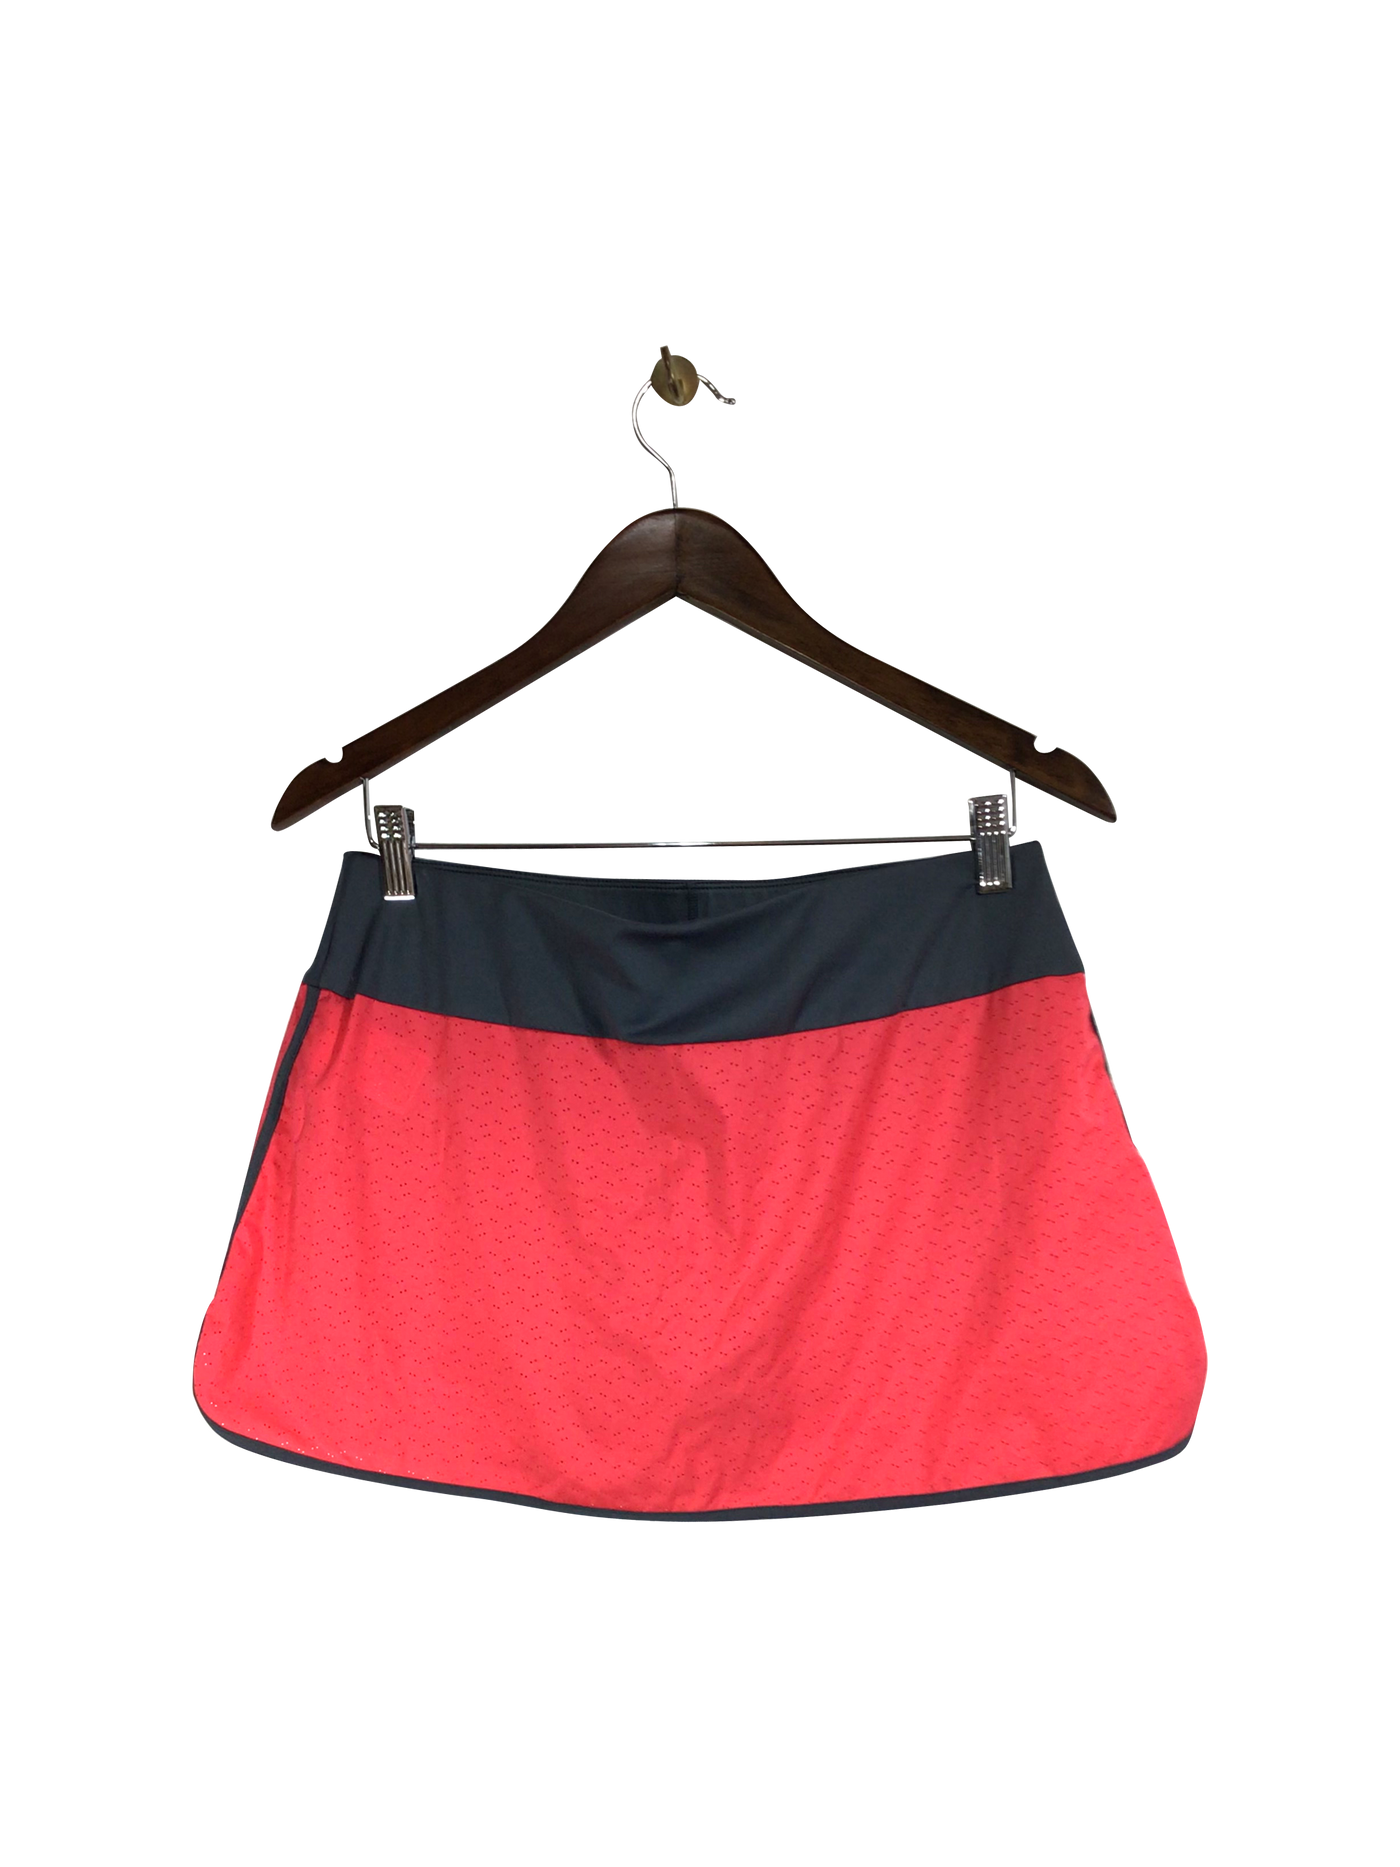 WILSON Women Activewear Shorts & Skirts Regular fit in Pink - Size M | 7.14 $ KOOP